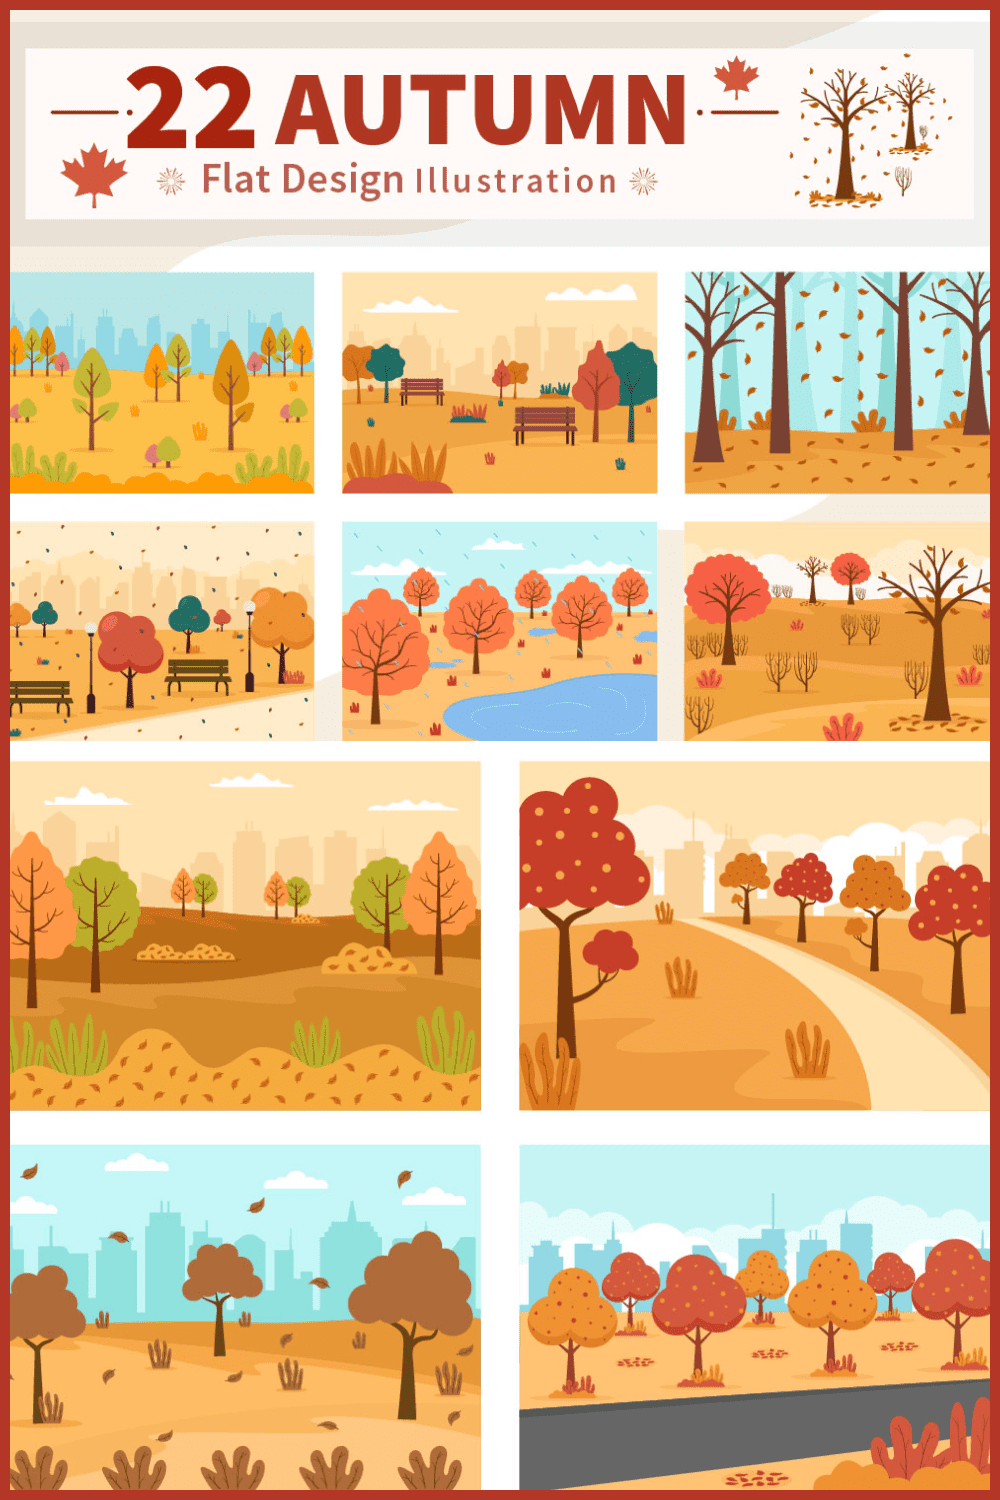 Autumn background landing page illustrations.